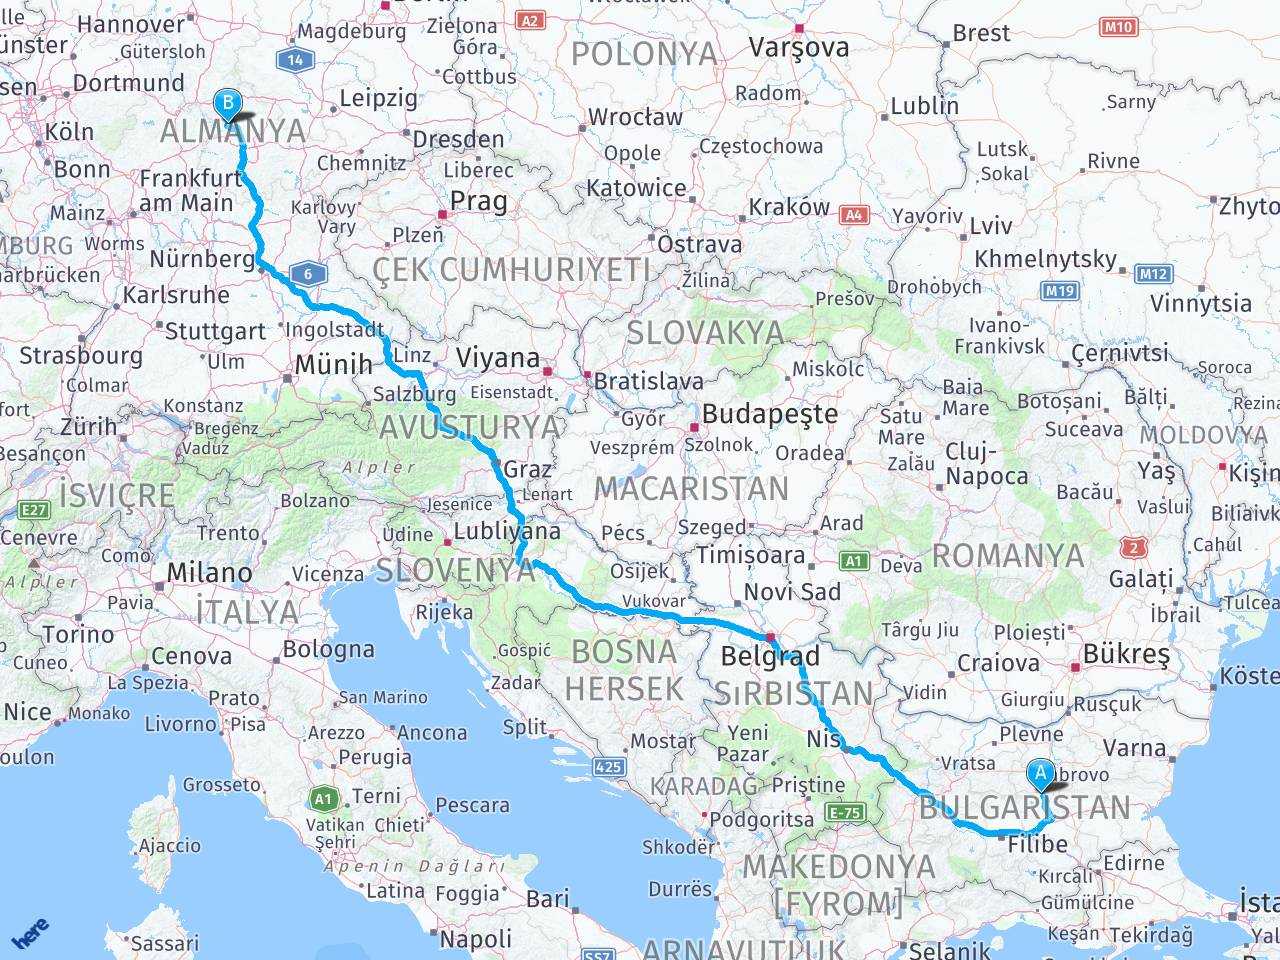 bulgaristan almanya arasi mesafe bulgaristan almanya yol haritasi bulgaristan almanya kac saat kac km